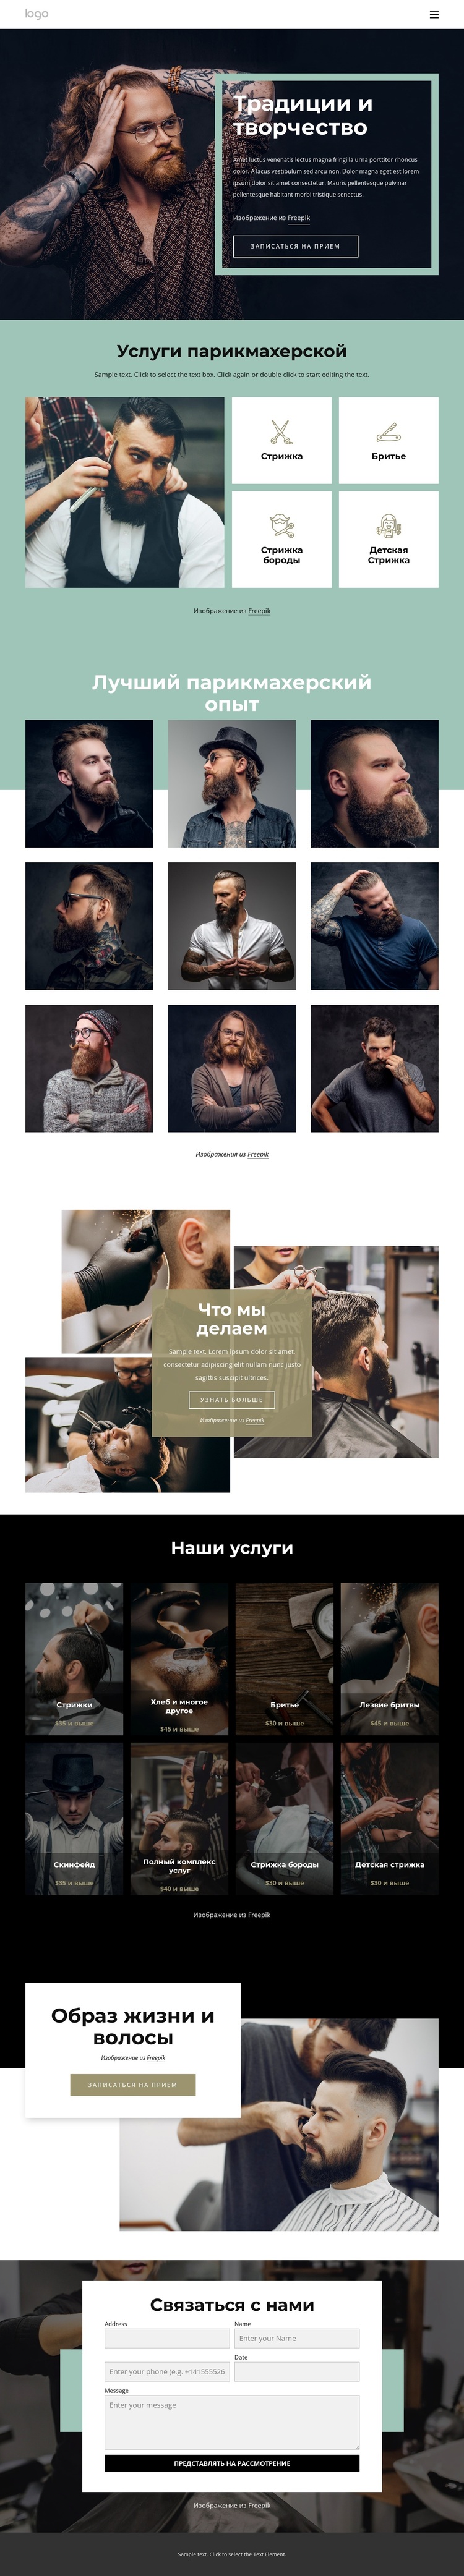 Общественный парикмахерский салон WordPress тема